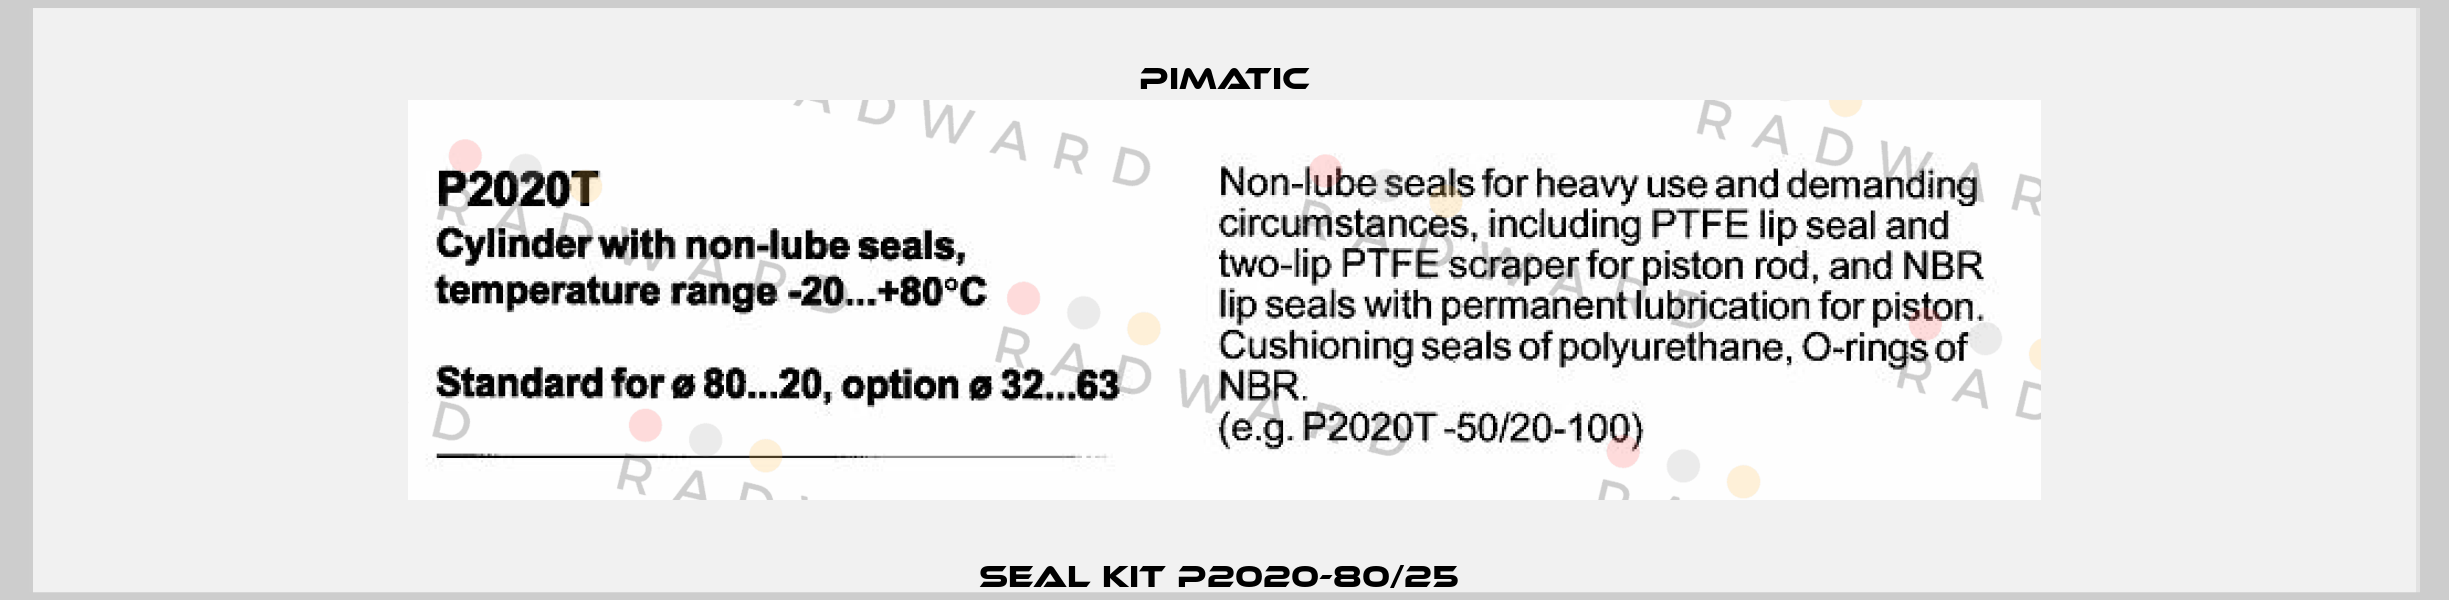 SEAL KIT P2020-80/25  Pimatic